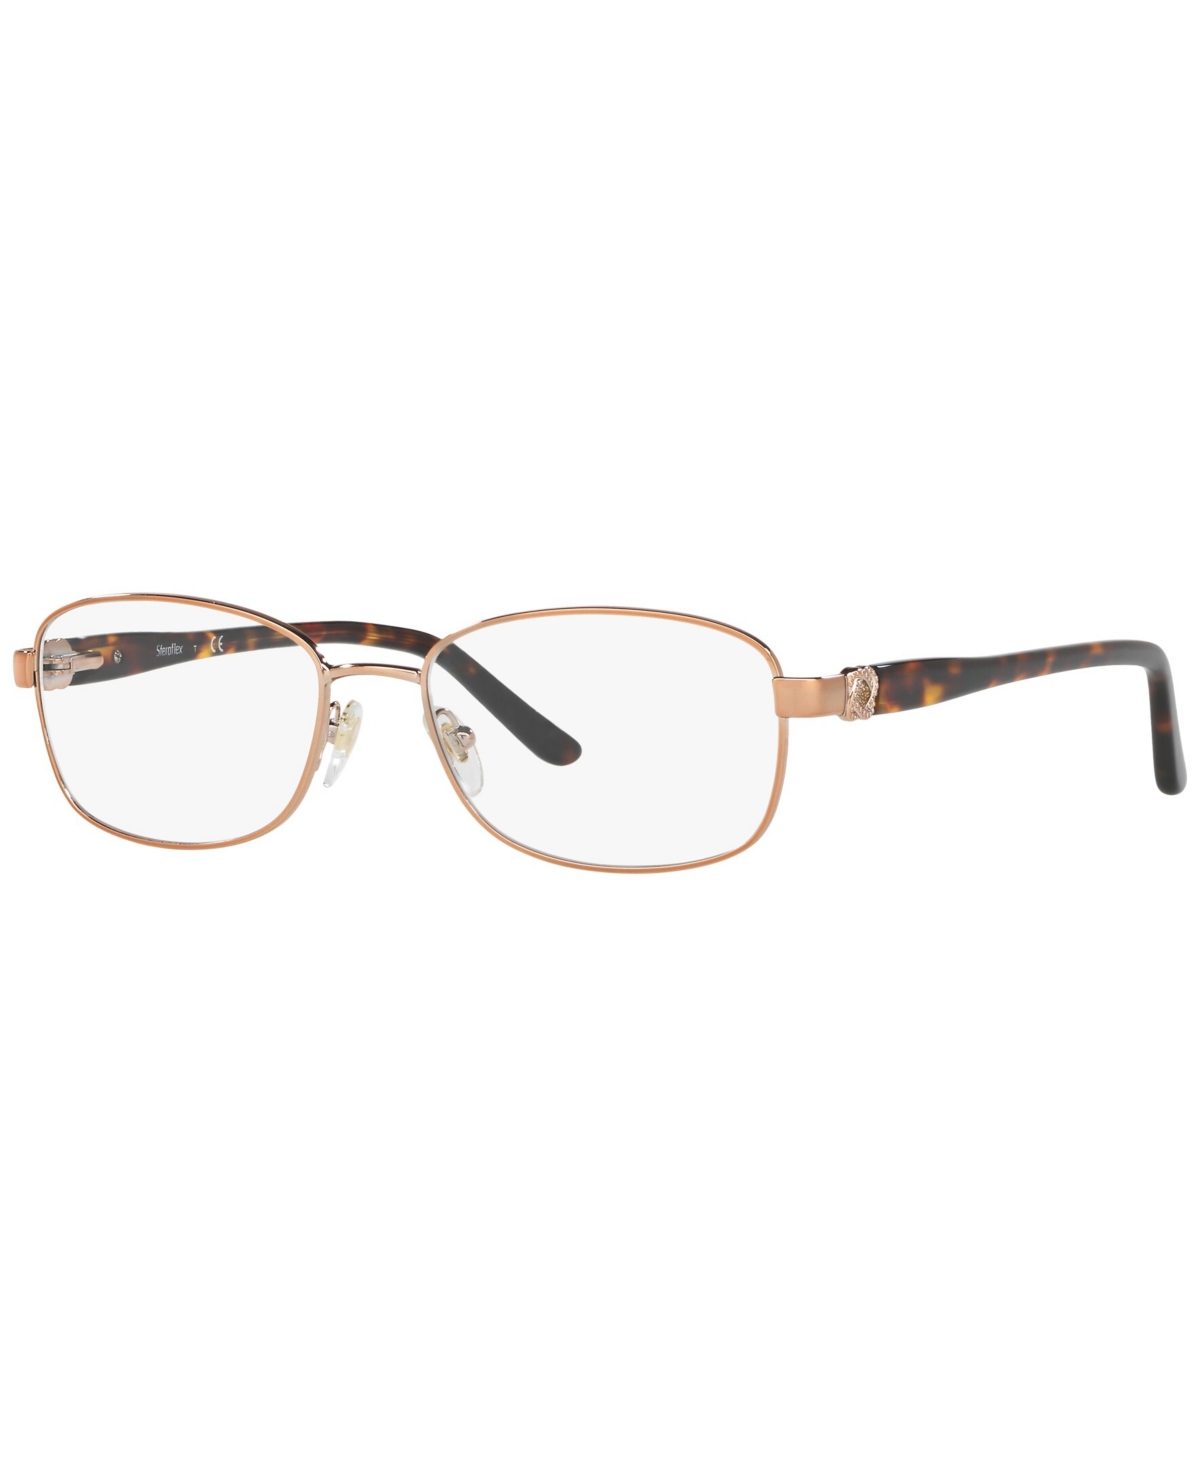 SF2570 Women's Rectangle Eyeglasses - Shiny Copper